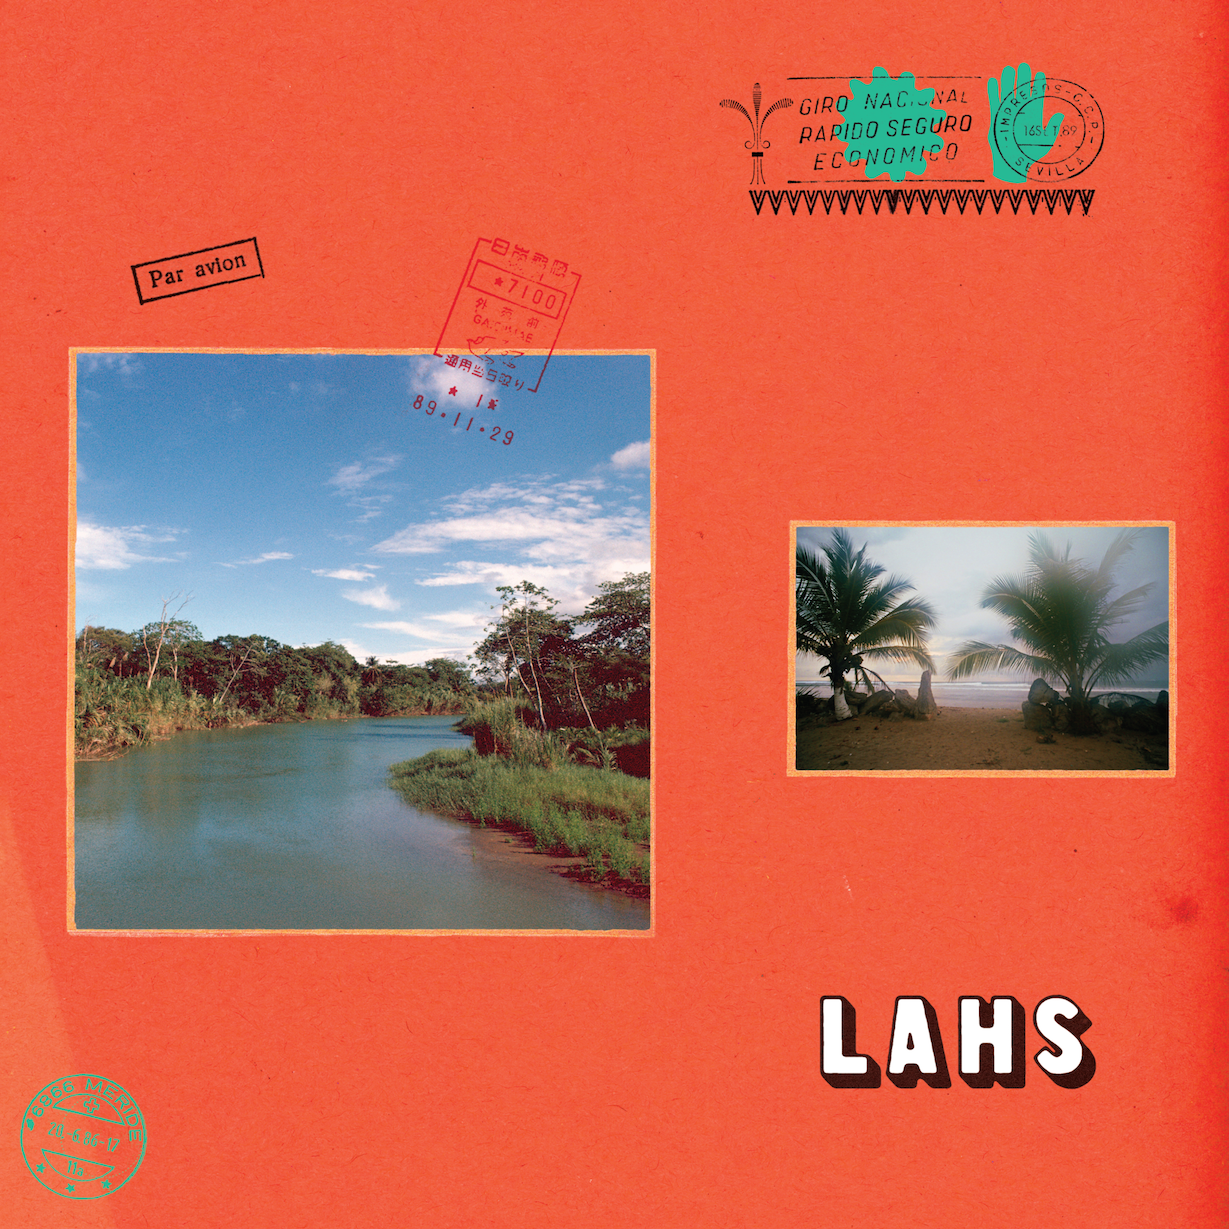 Allah-Las - LAHS - New LP Record 2019 Mexican Summer USA Indie Exclusive Orange Vinyl & Download - Psychedelic Rock